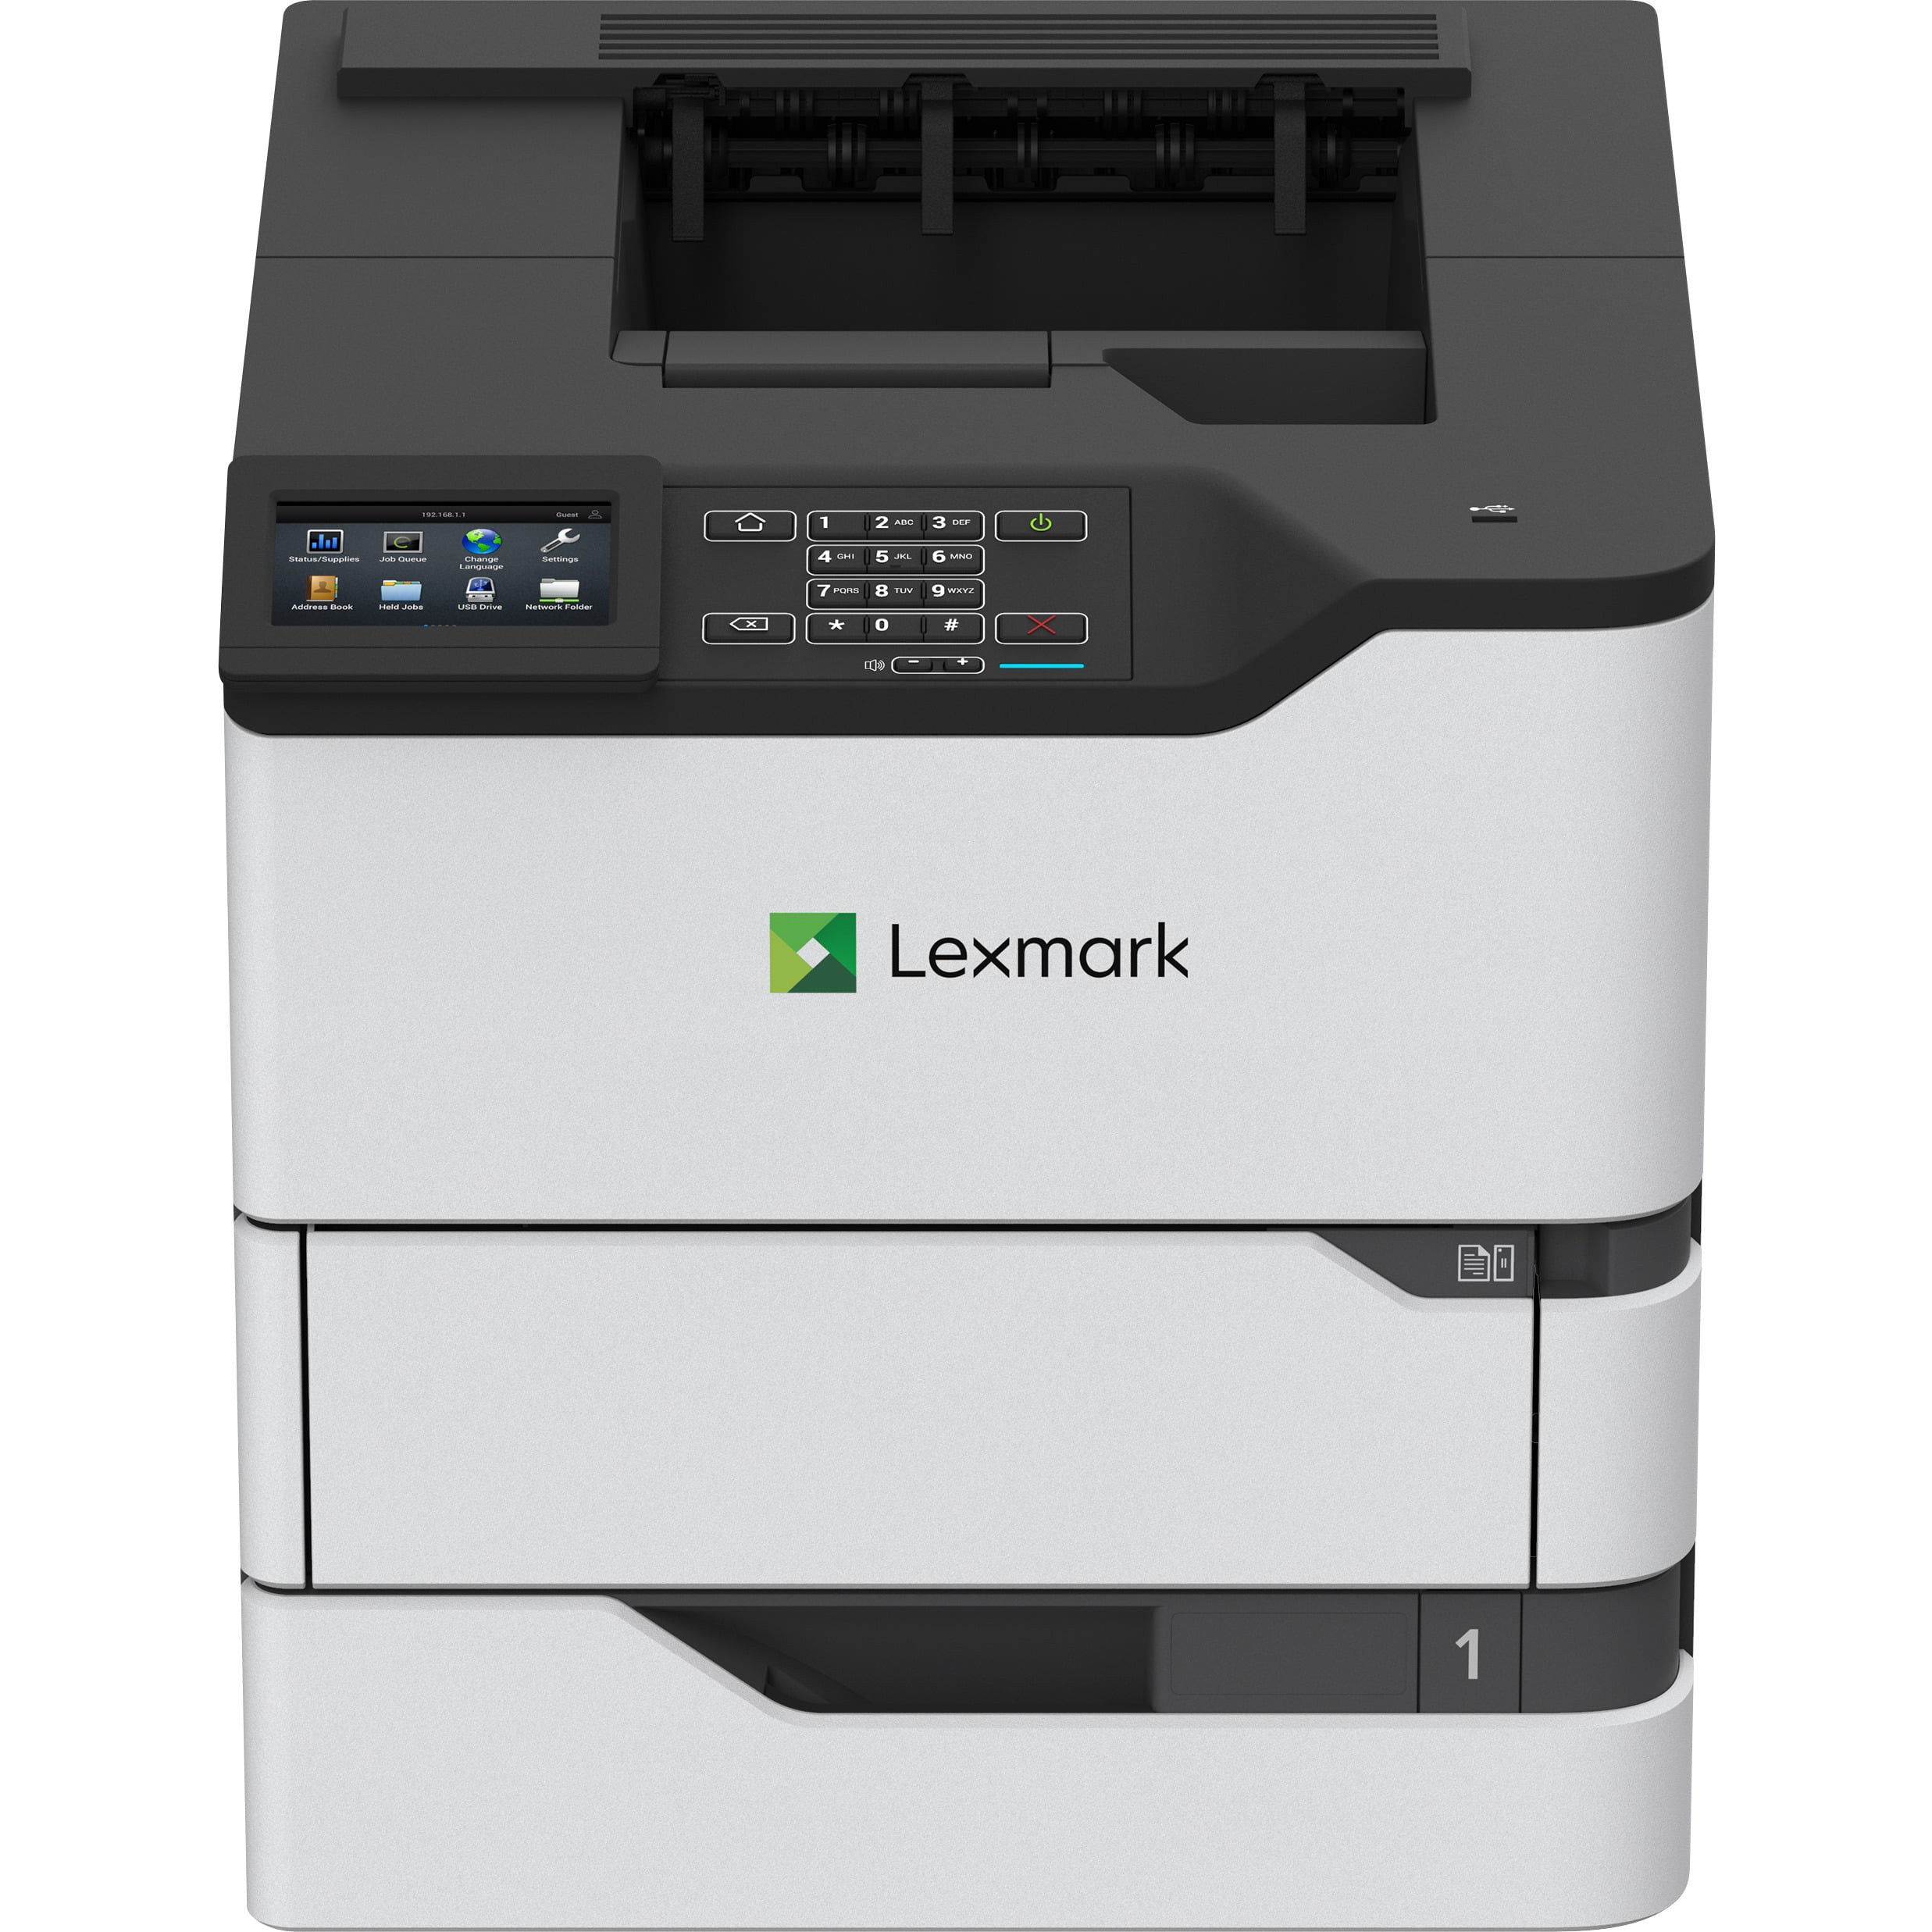 copier laser printer